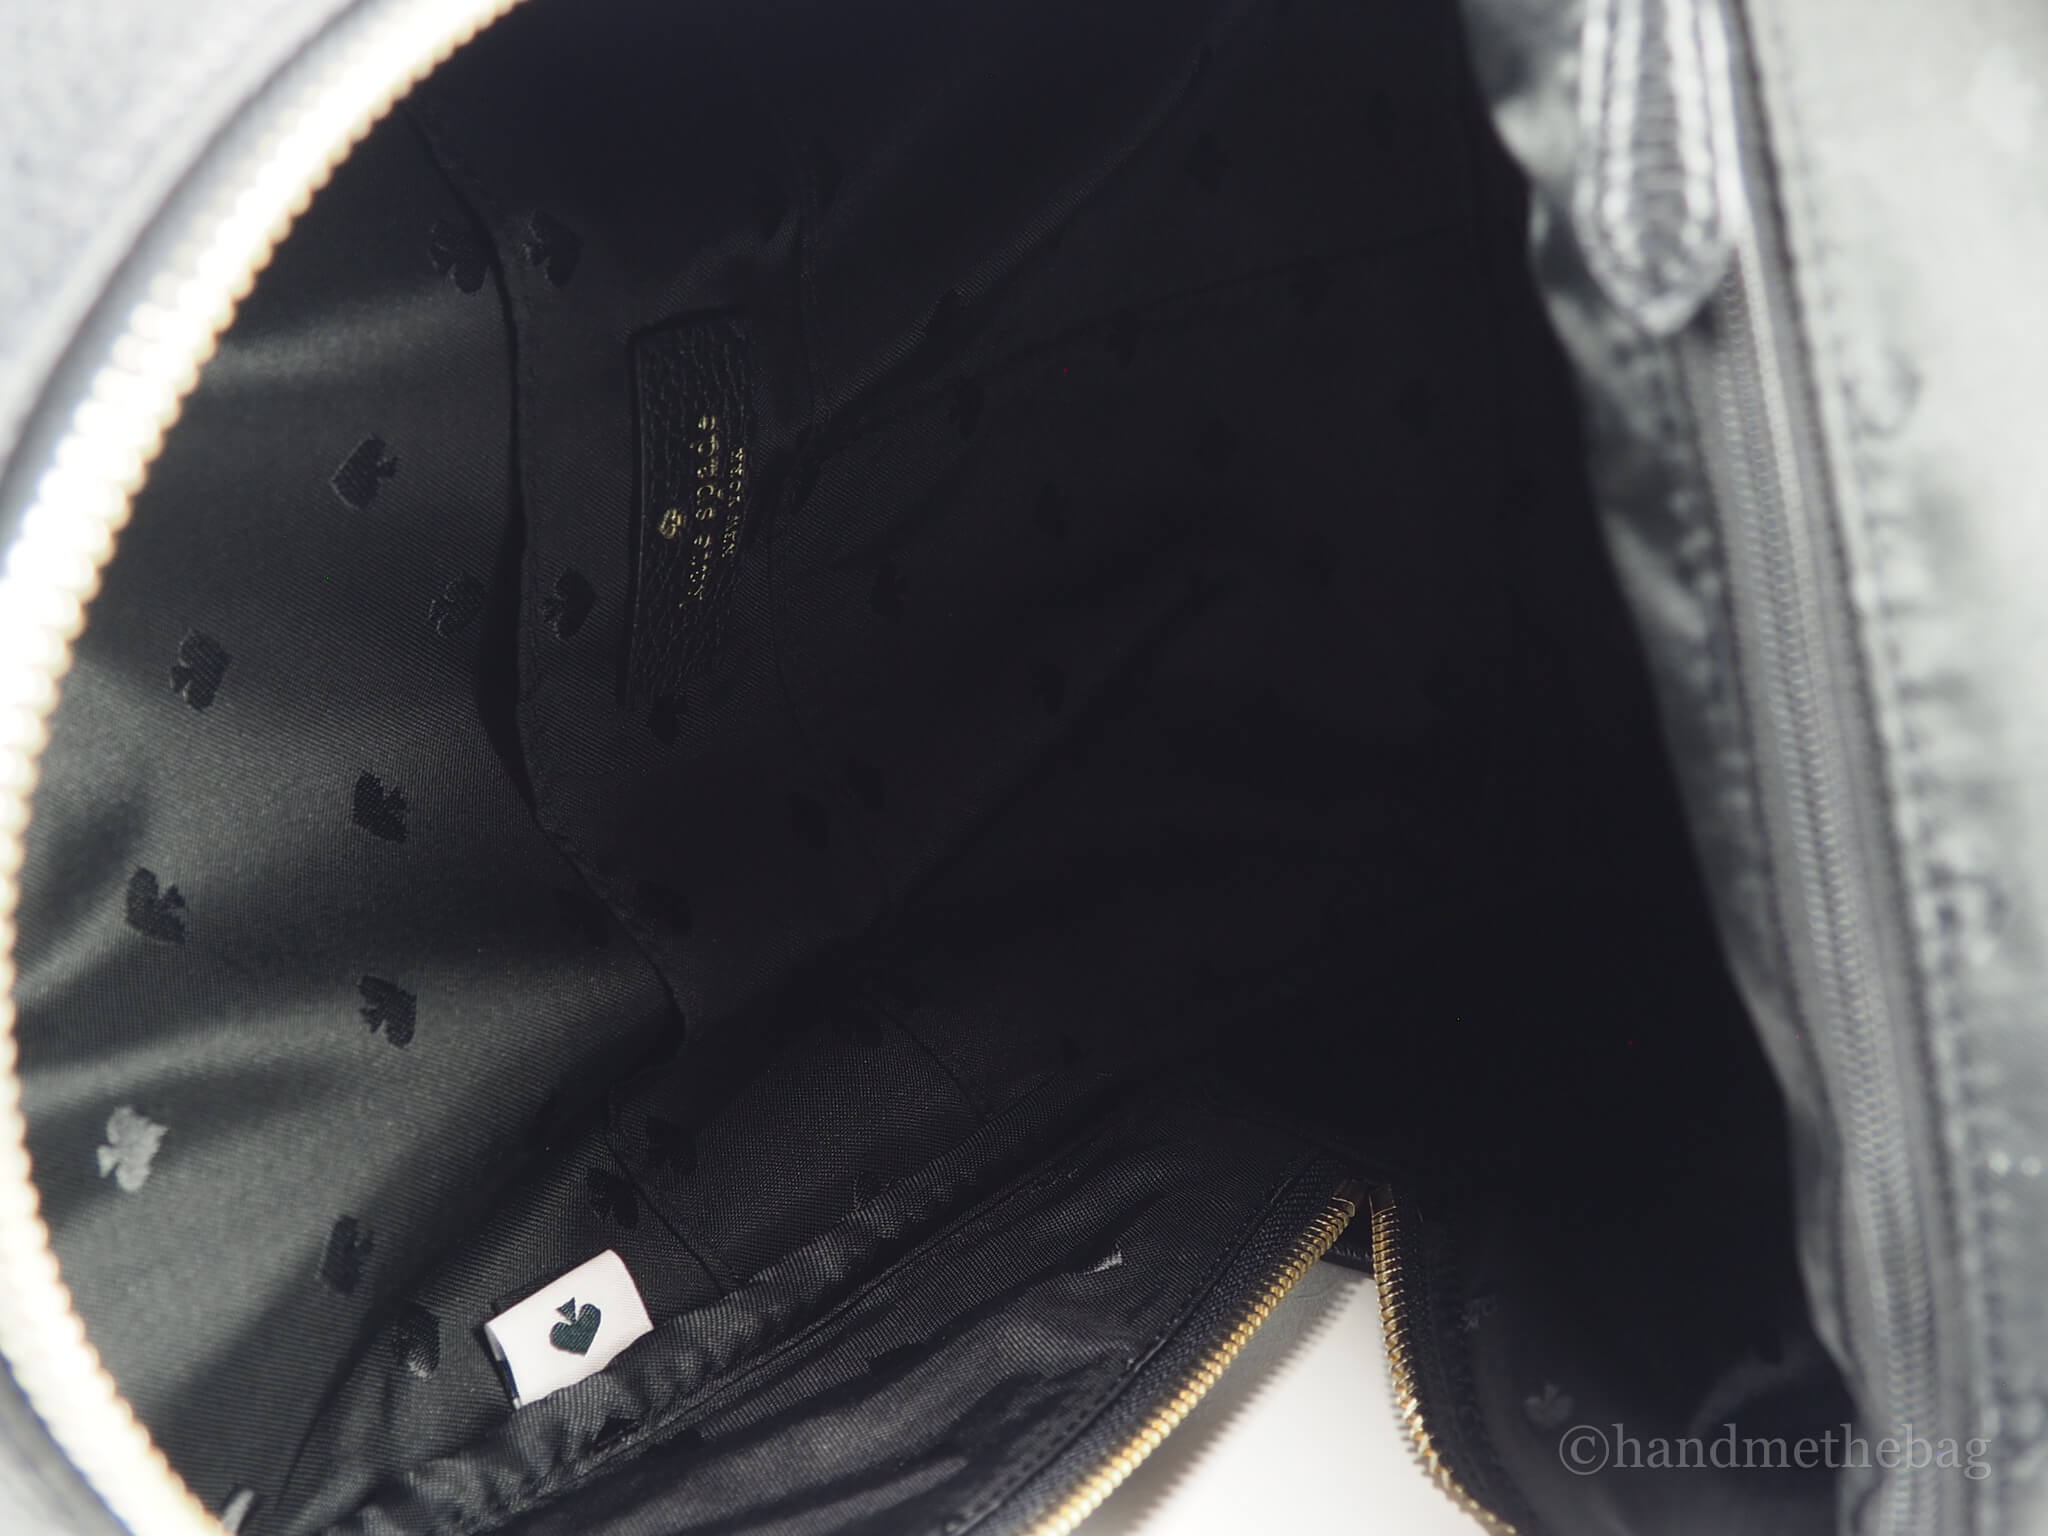 Kate Spade Leila Pebbled Leather Medium Dome Backpack School Bag Black